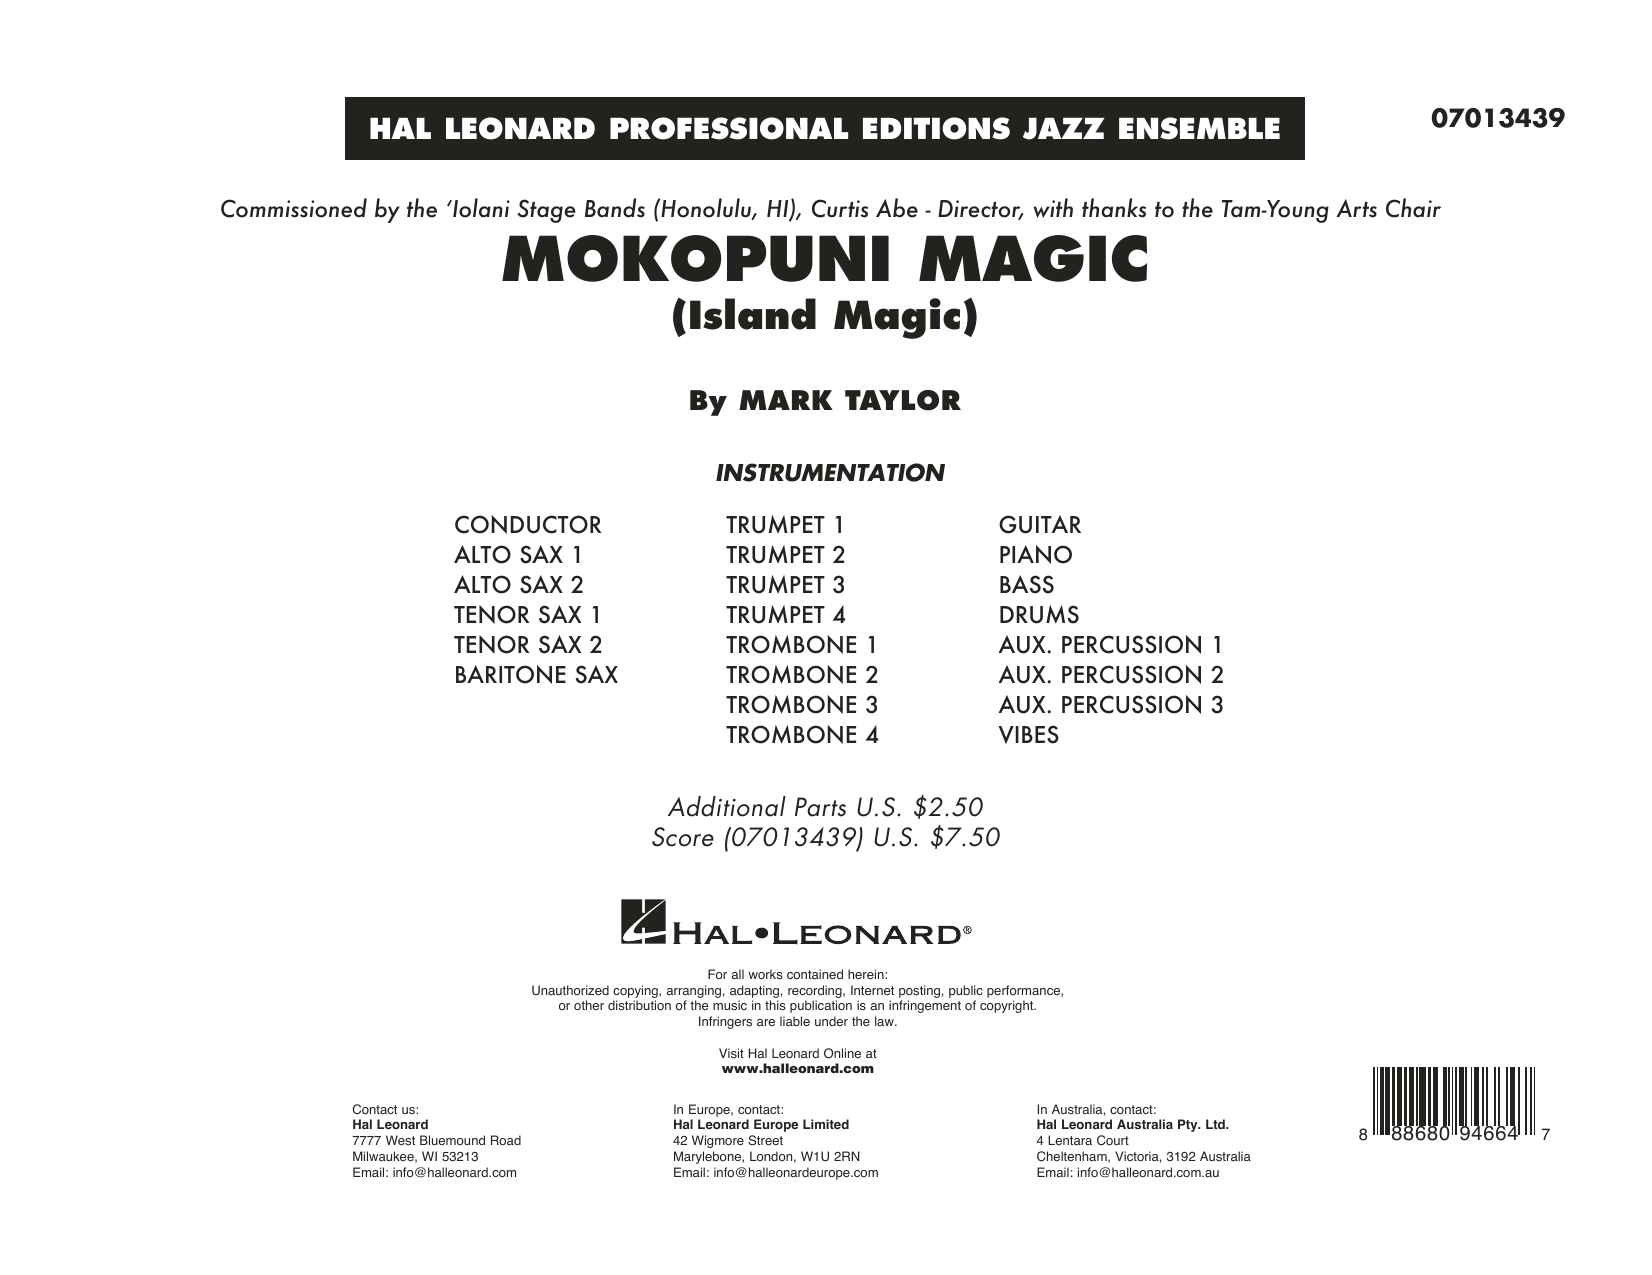 Download Mark Taylor Mokopuni Magic (Island Magic) - Conductor Score (Full Score) Sheet Music and learn how to play Jazz Ensemble PDF digital score in minutes